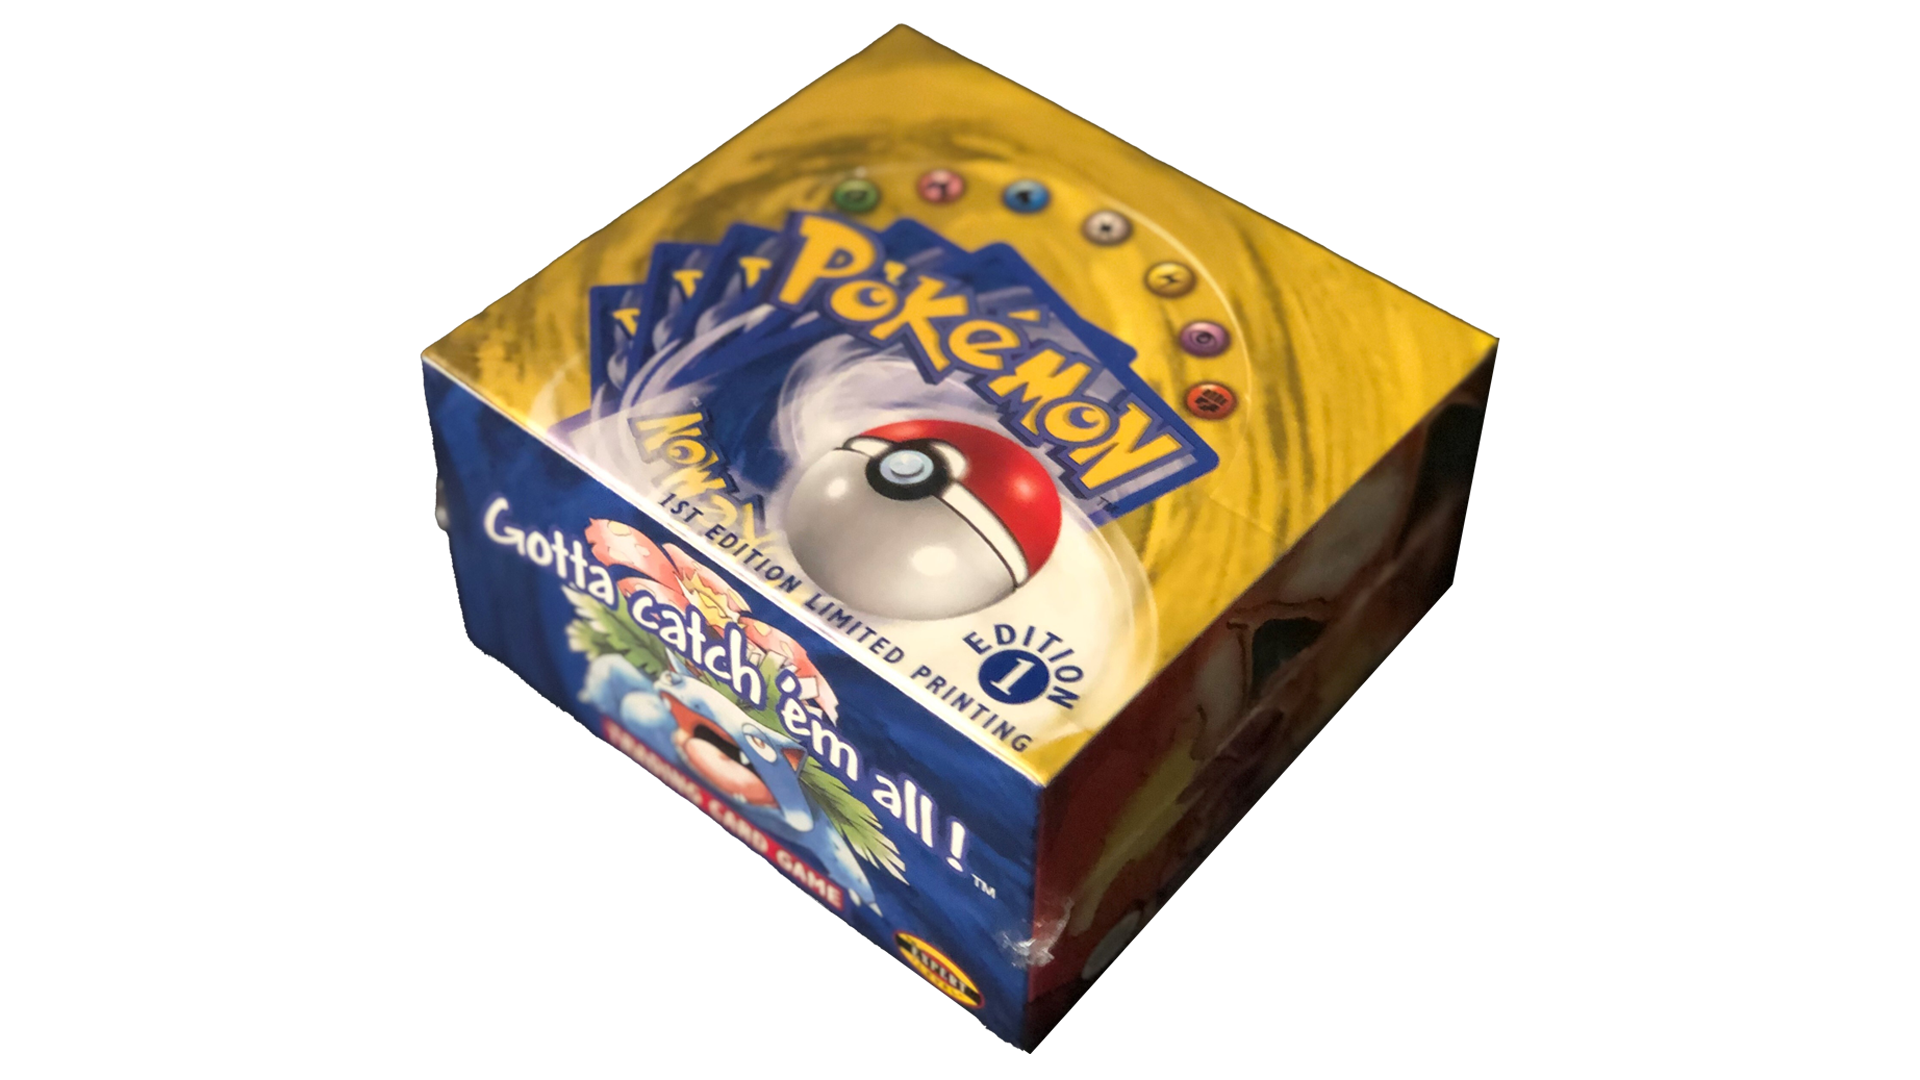 1999 Pokémon English Base Set Shadowless 1st Edition Booster Box image